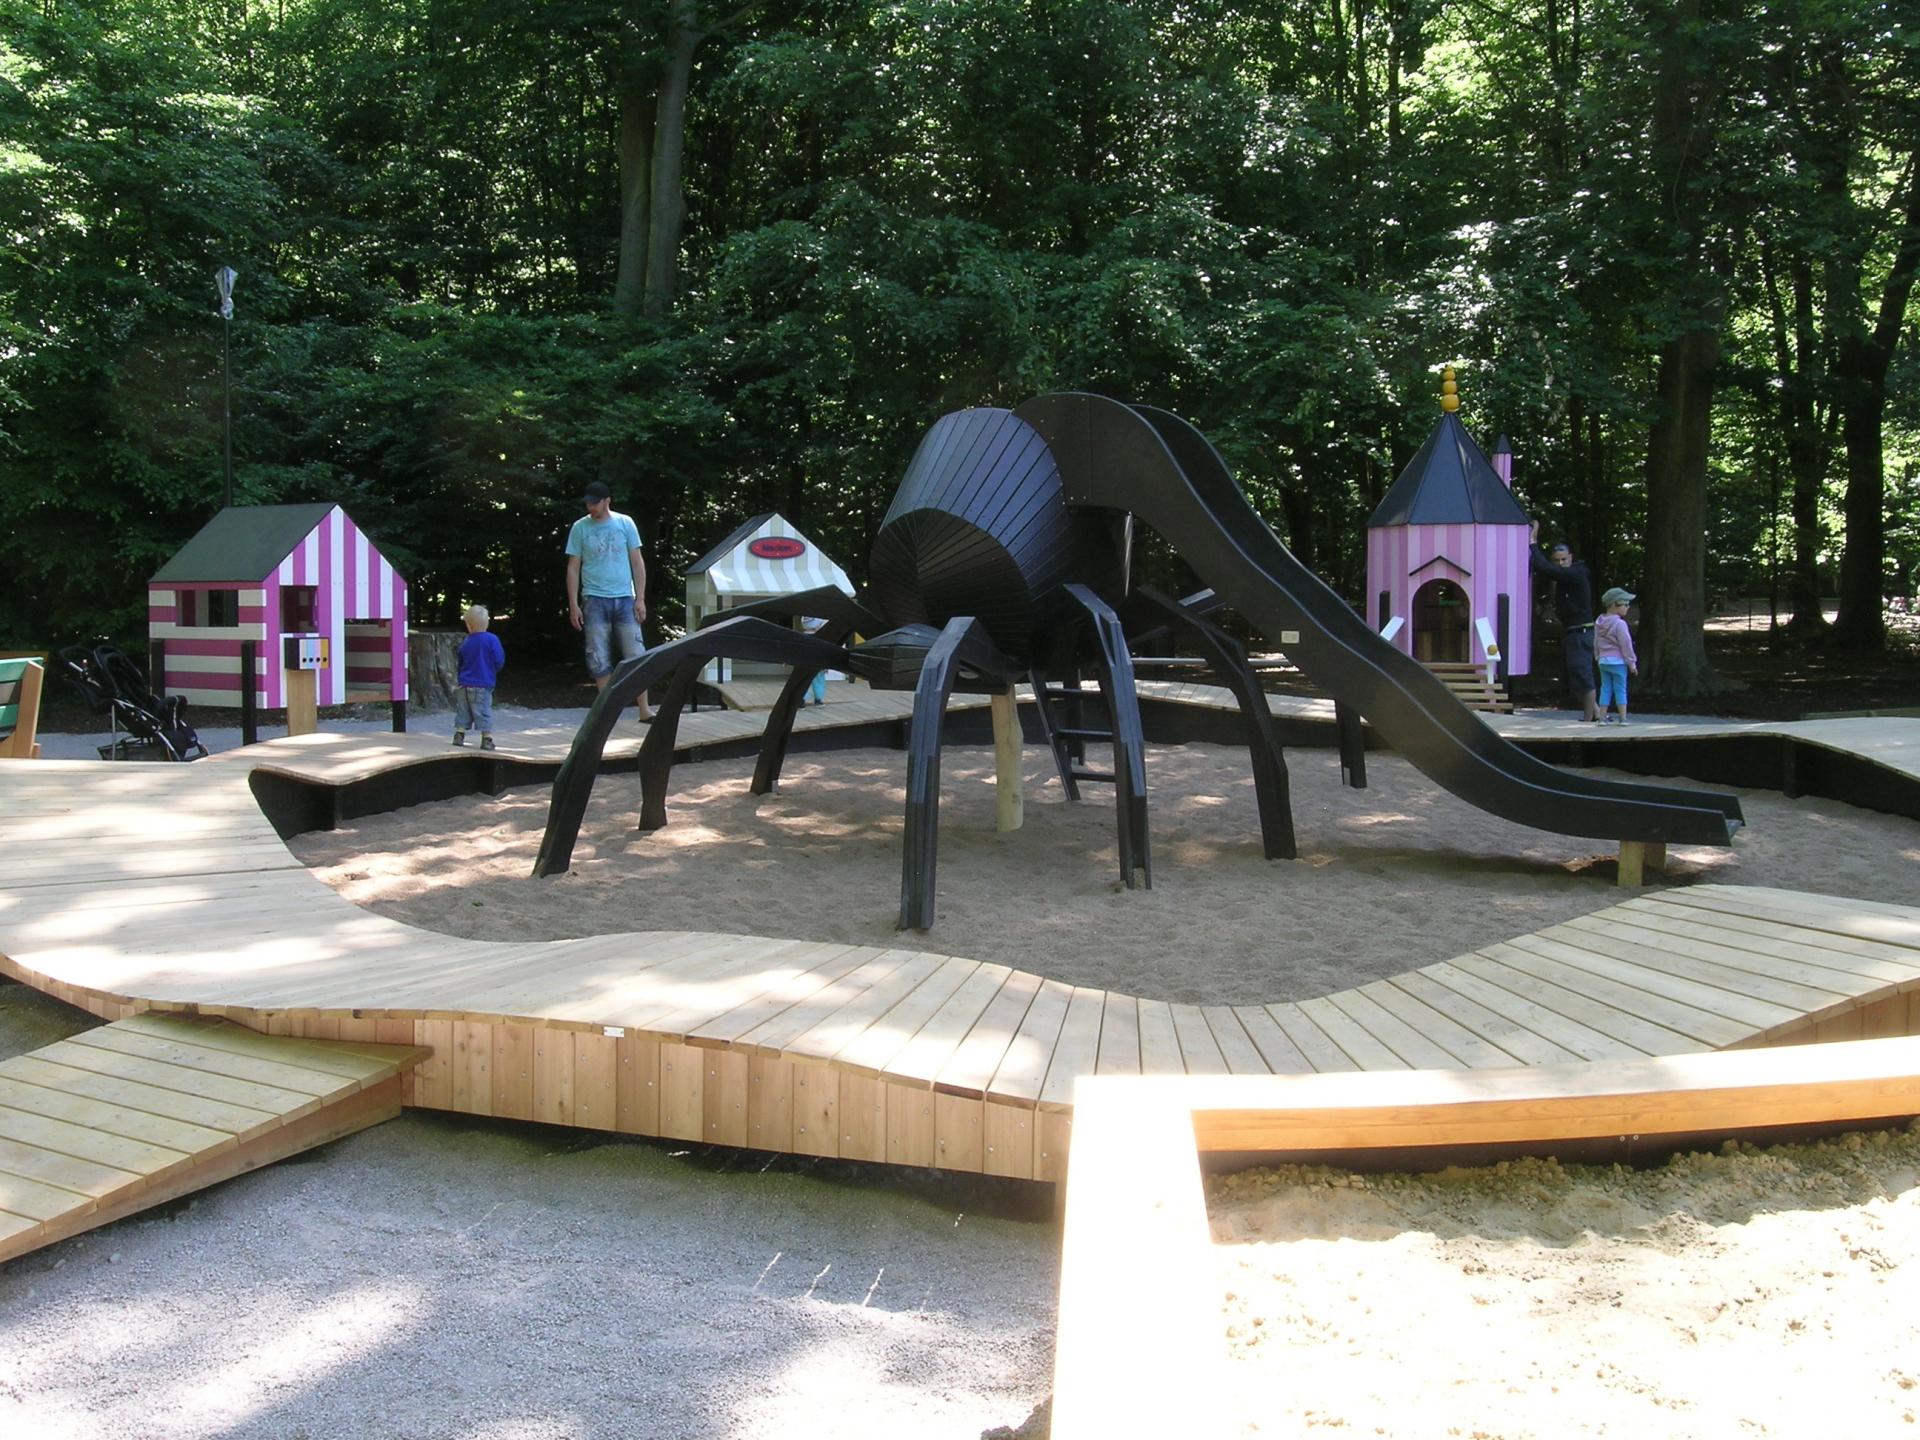 The striped town monstrum playground legeplads malmö